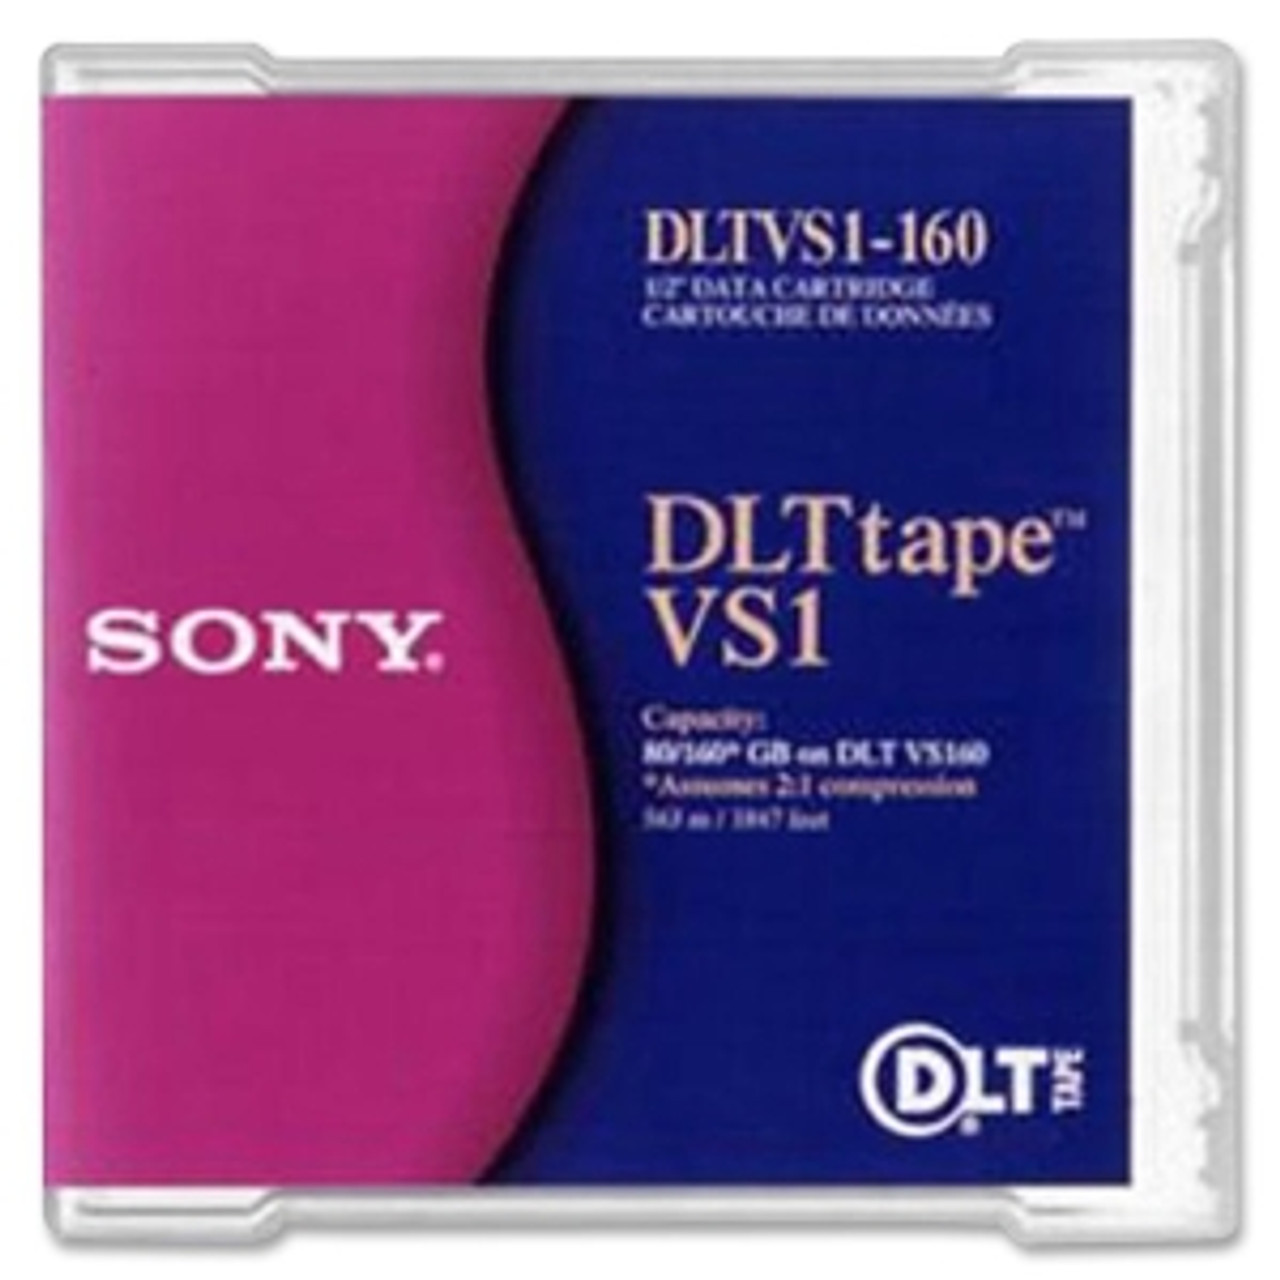 DLTVS160 - Sony DLTtape VS1 Tape Cartridge - DLT DLTtape VS1 - 80GB (Native) / 160GB (Compressed) - 1 Pack